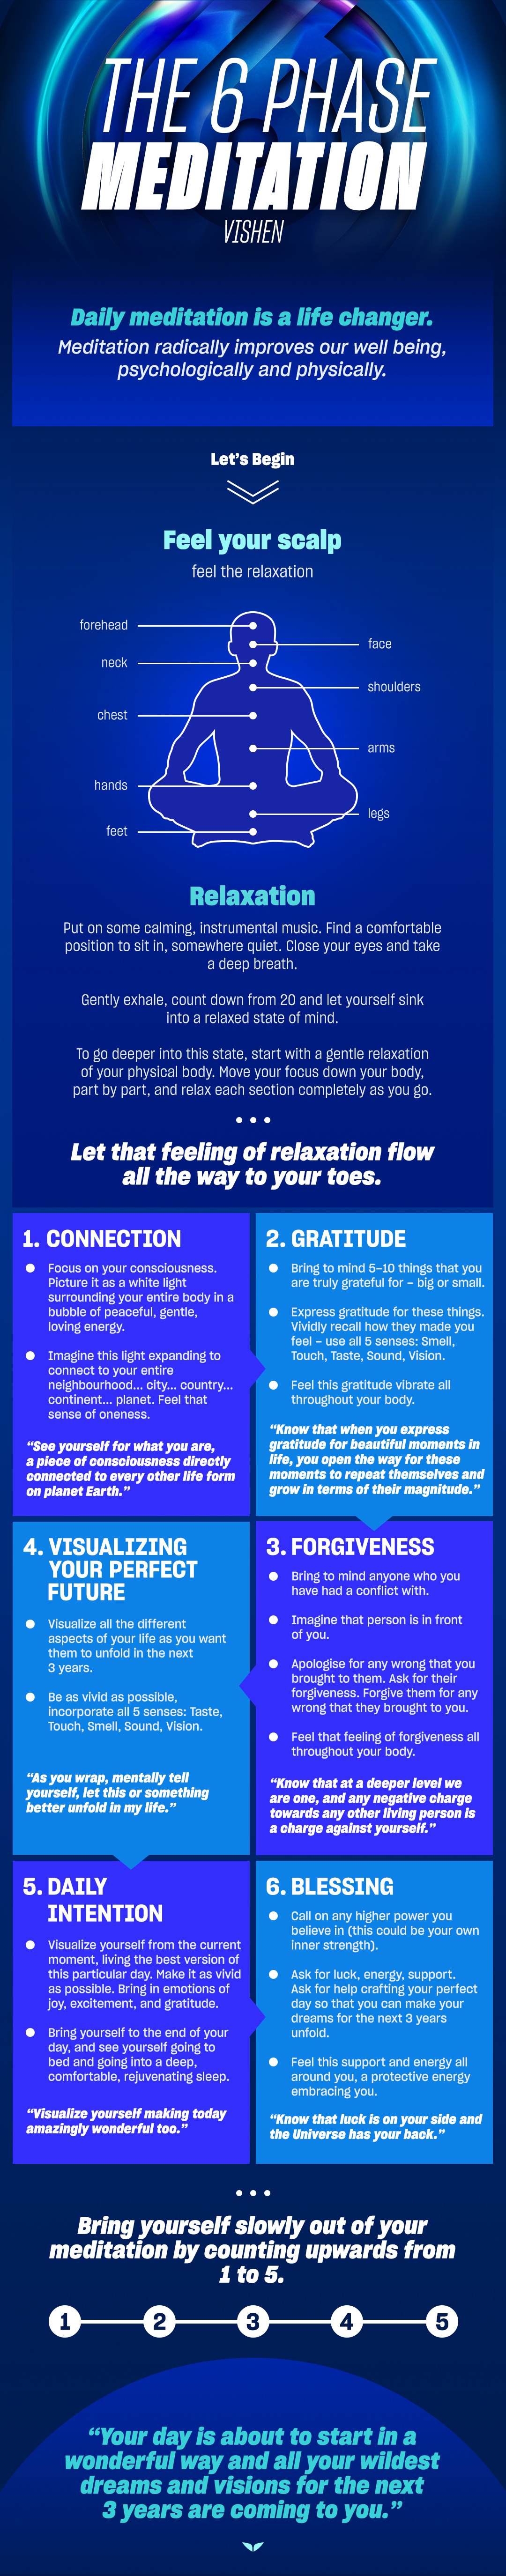 6 Phase Meditation Infographic